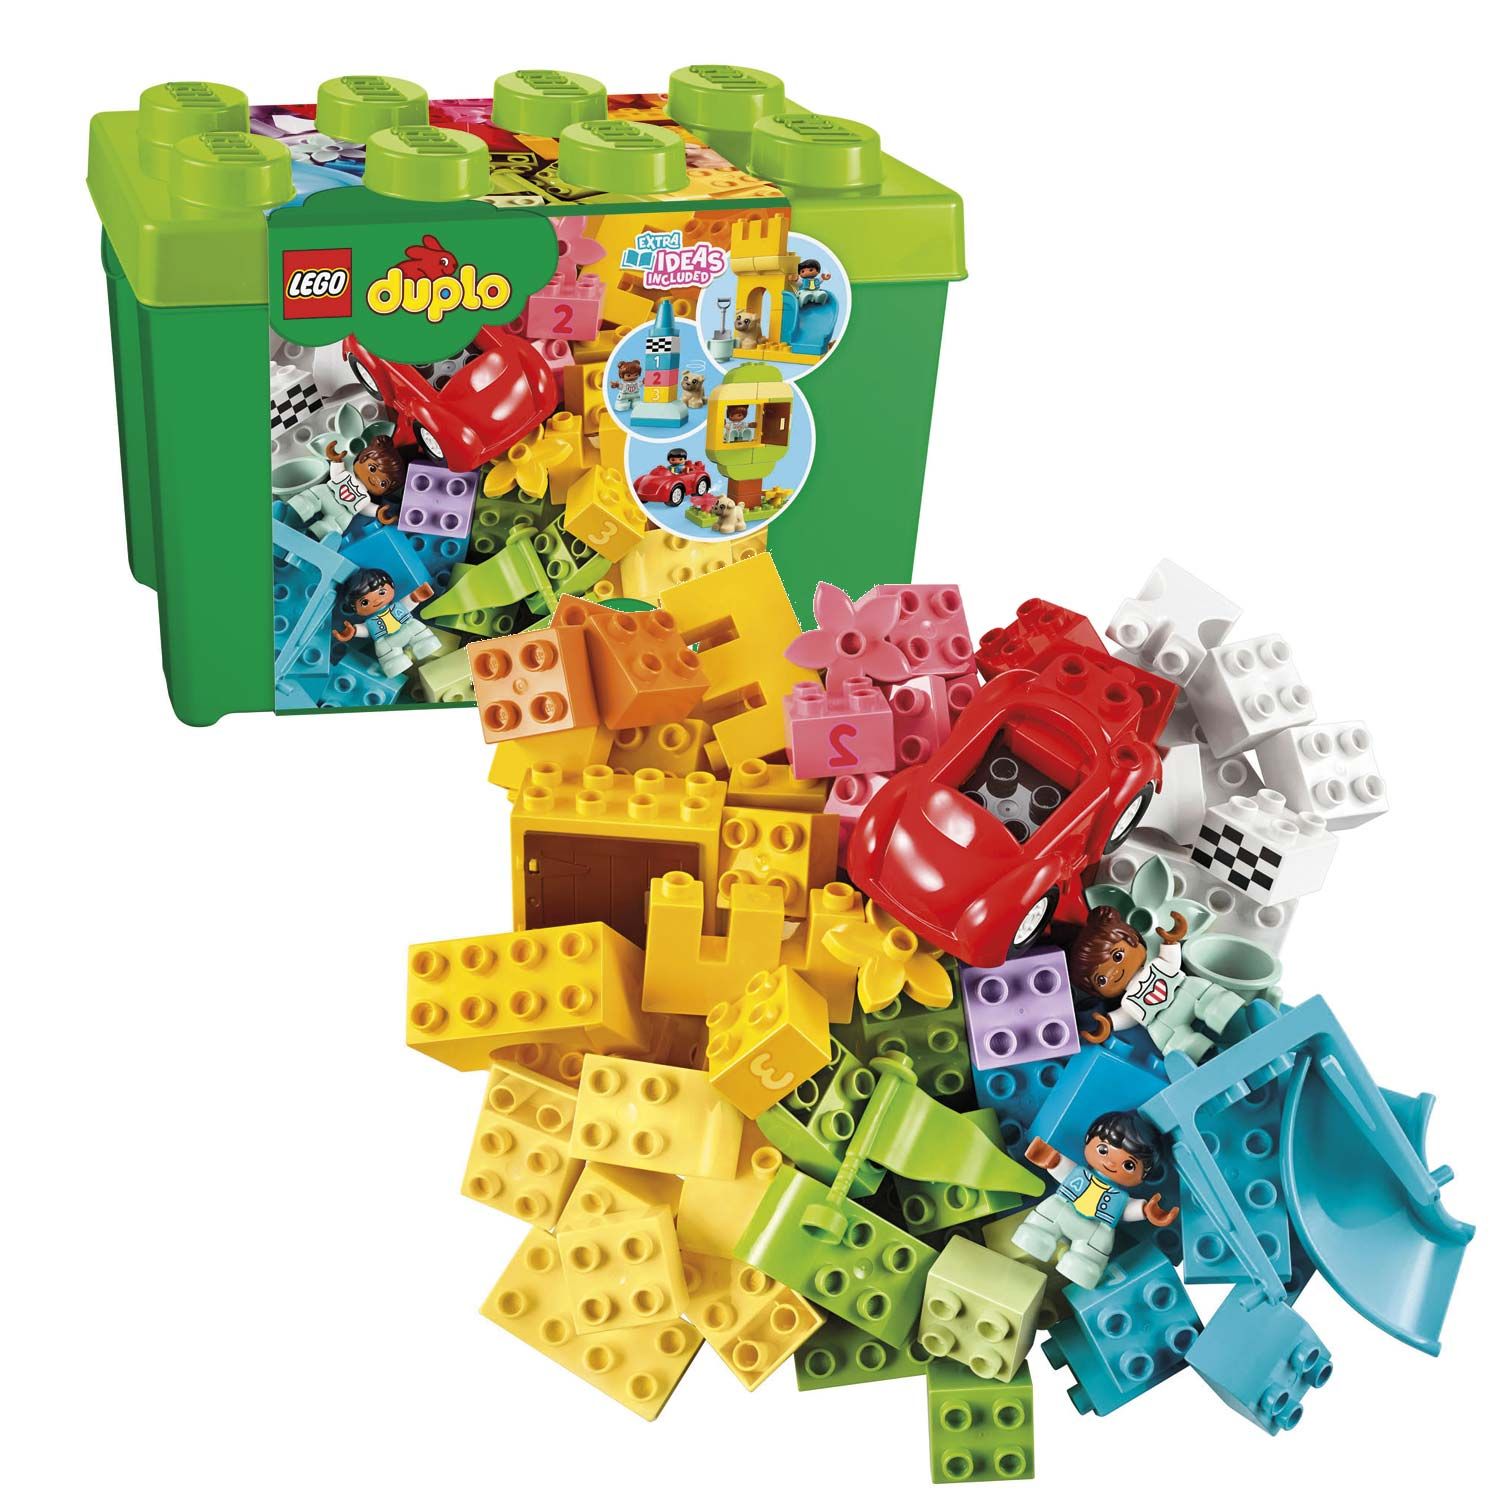 Lego Duplo - Plaque de construction verte (10980)